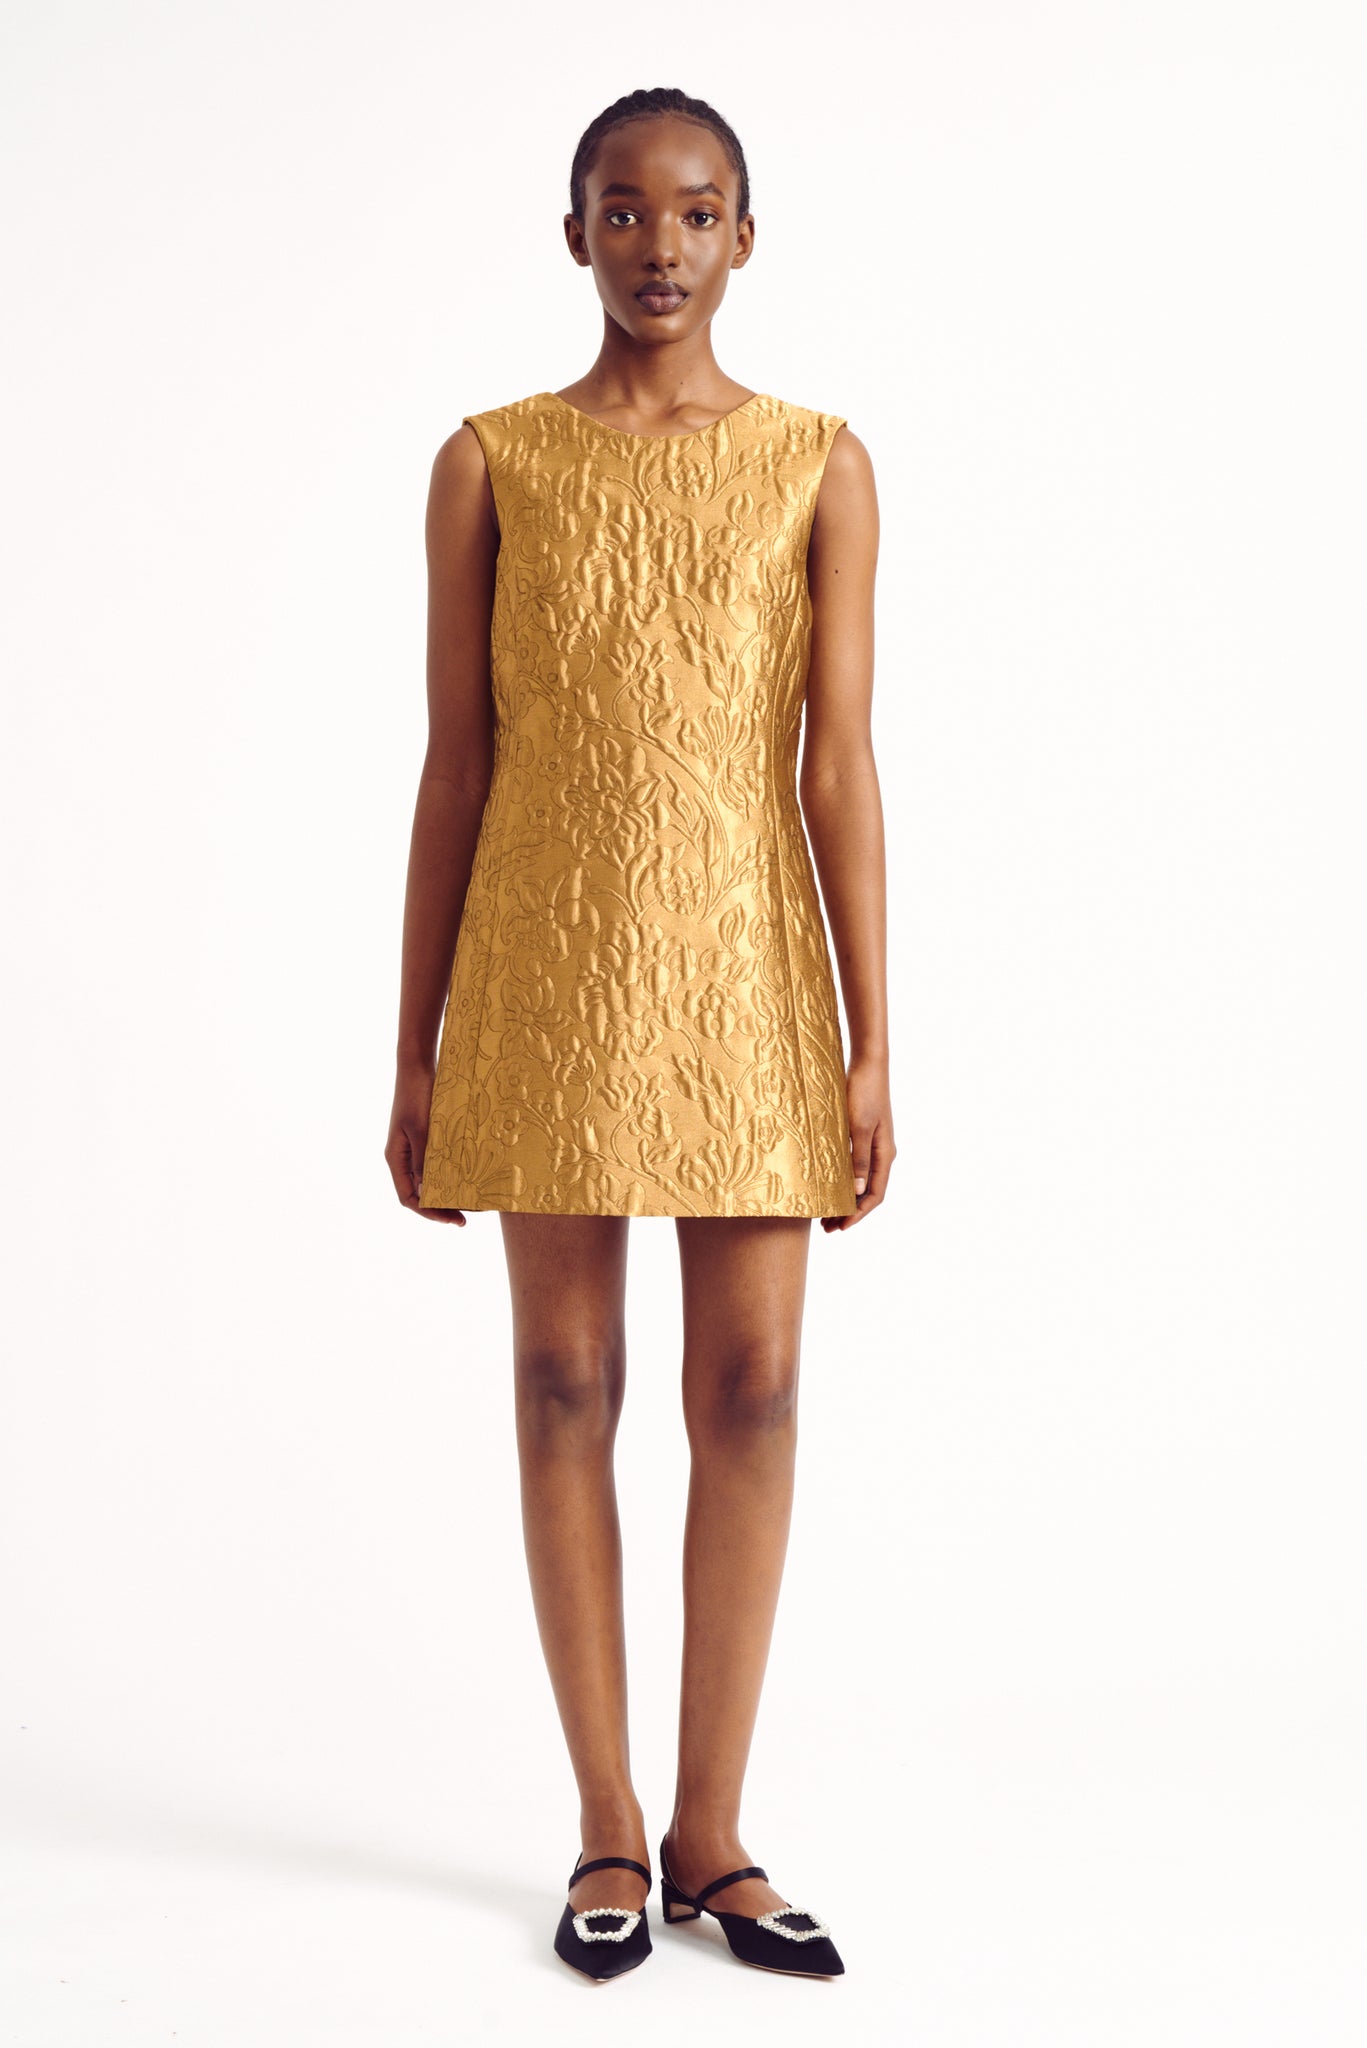 Irma Dress in Gold Lurex Metallic Jacquard | Emilia Wickstead